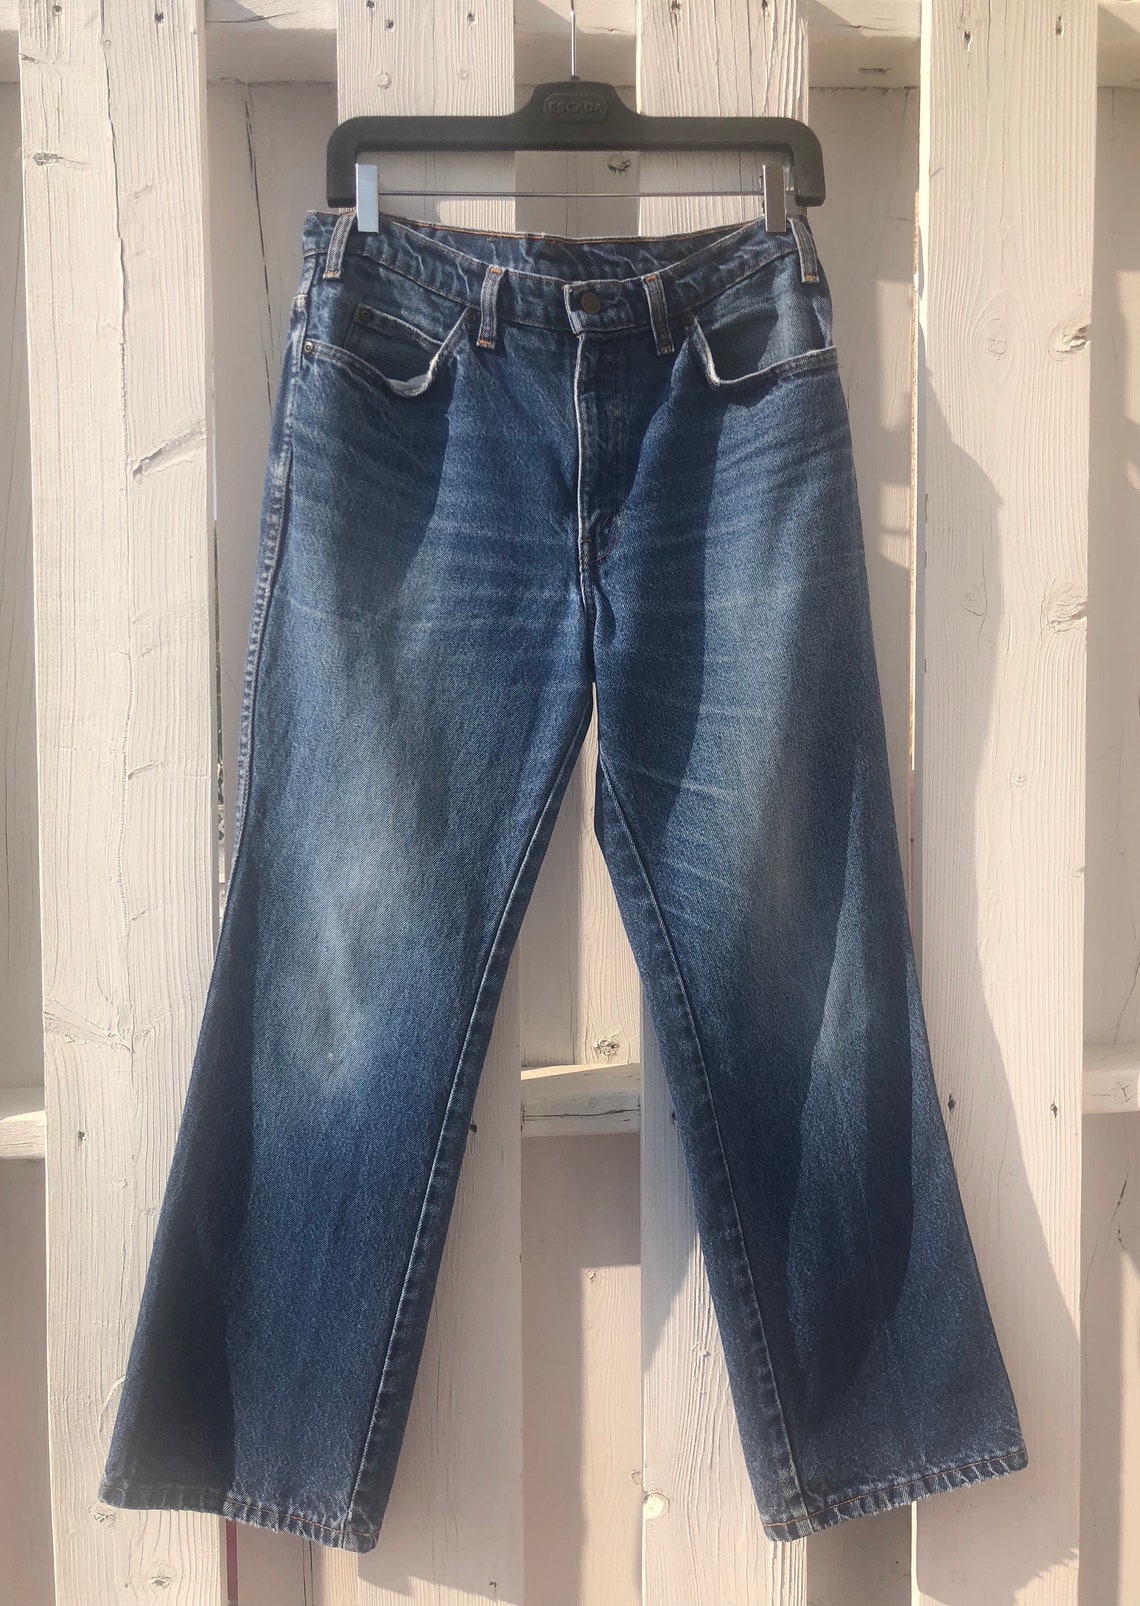 Vintage GWG jeans straight leg grunge 34 x 30 33 inch | Etsy